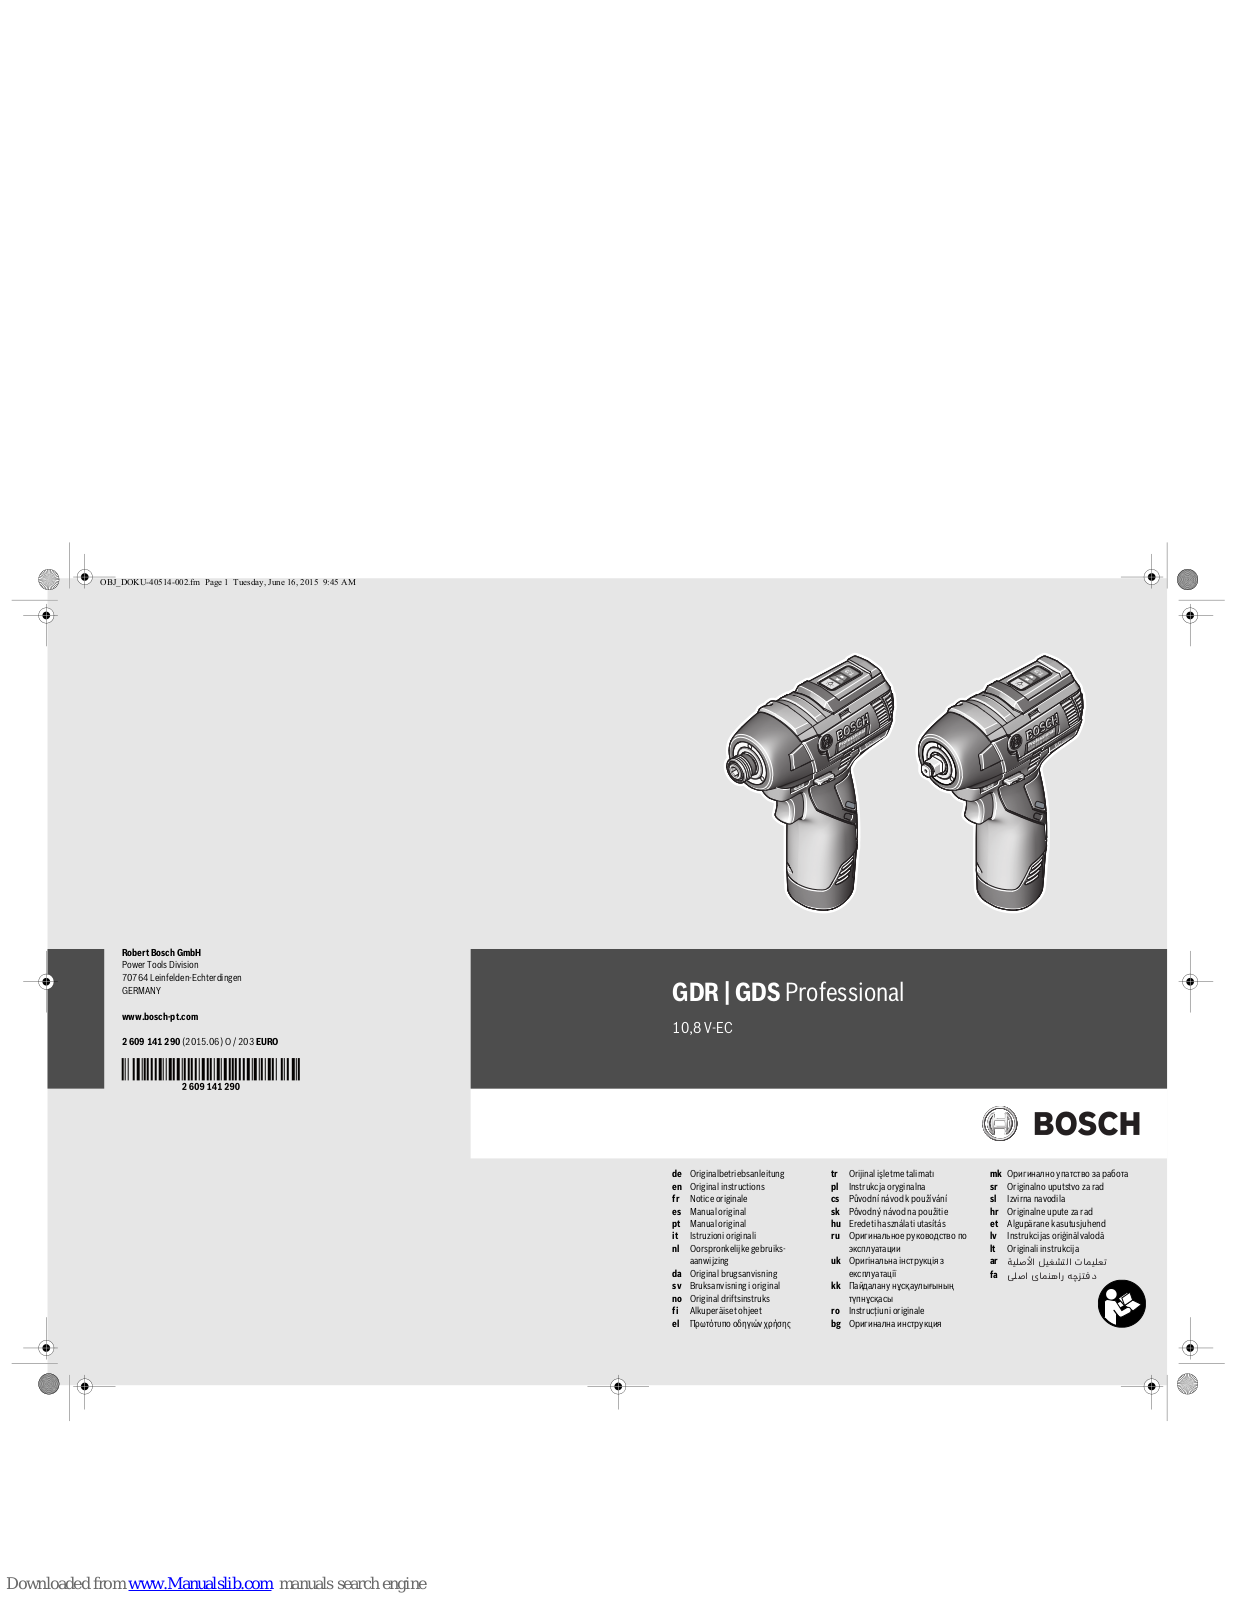 Bosch GDS Professional 10.8 V-EC, GDR Professional 10.8 V-EC Original Instructions Manual